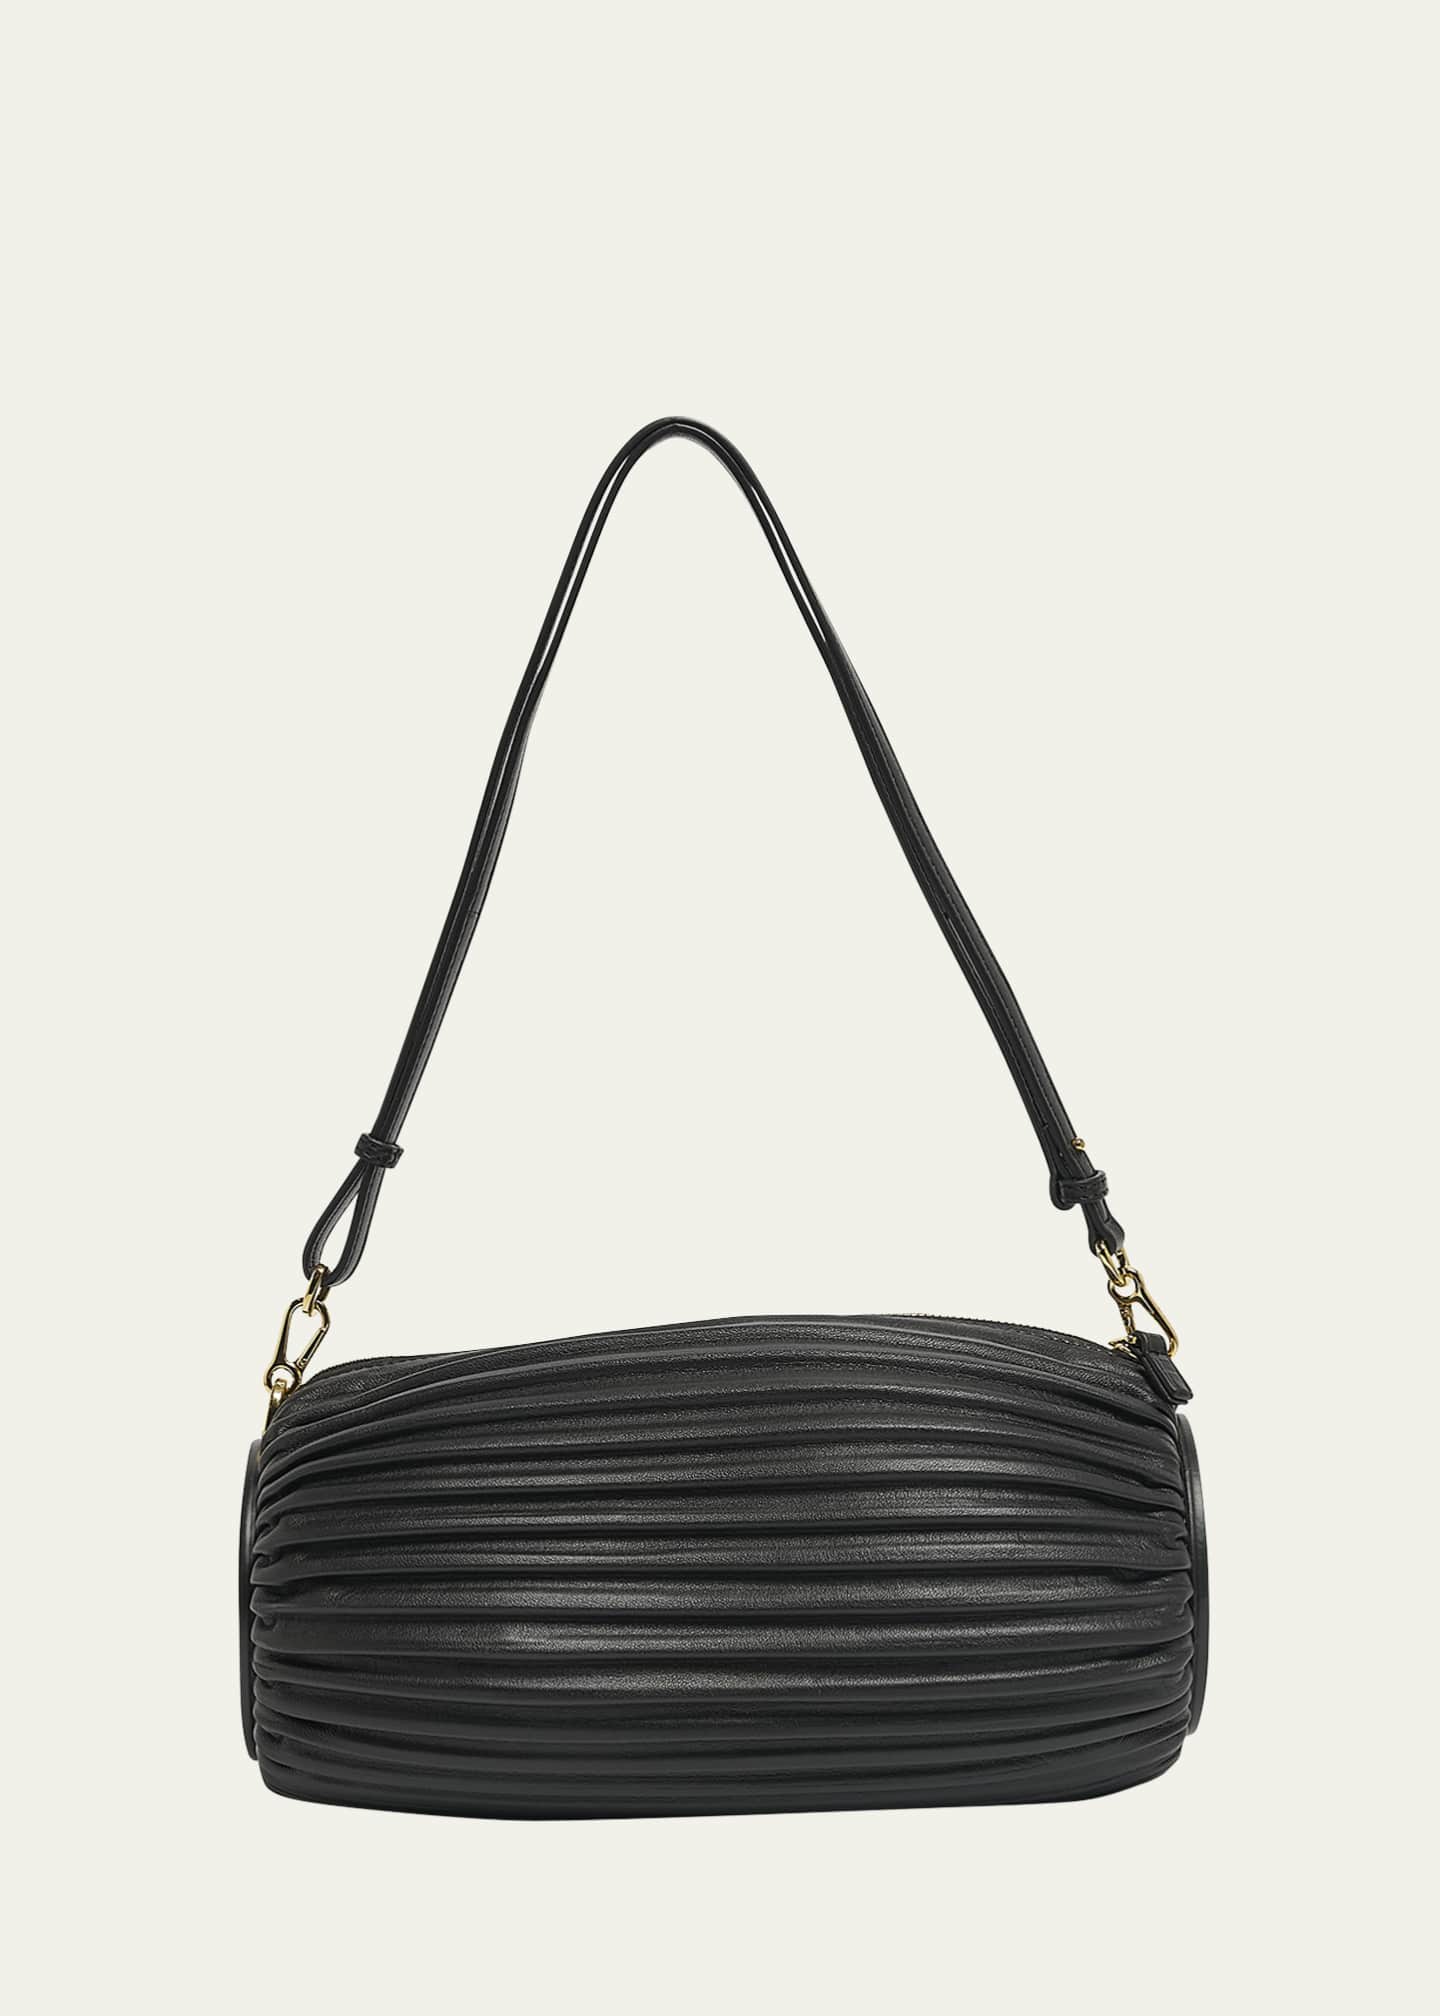 Loewe - Women's Bracelet Pleated Shoulder Bag - Black - Leather